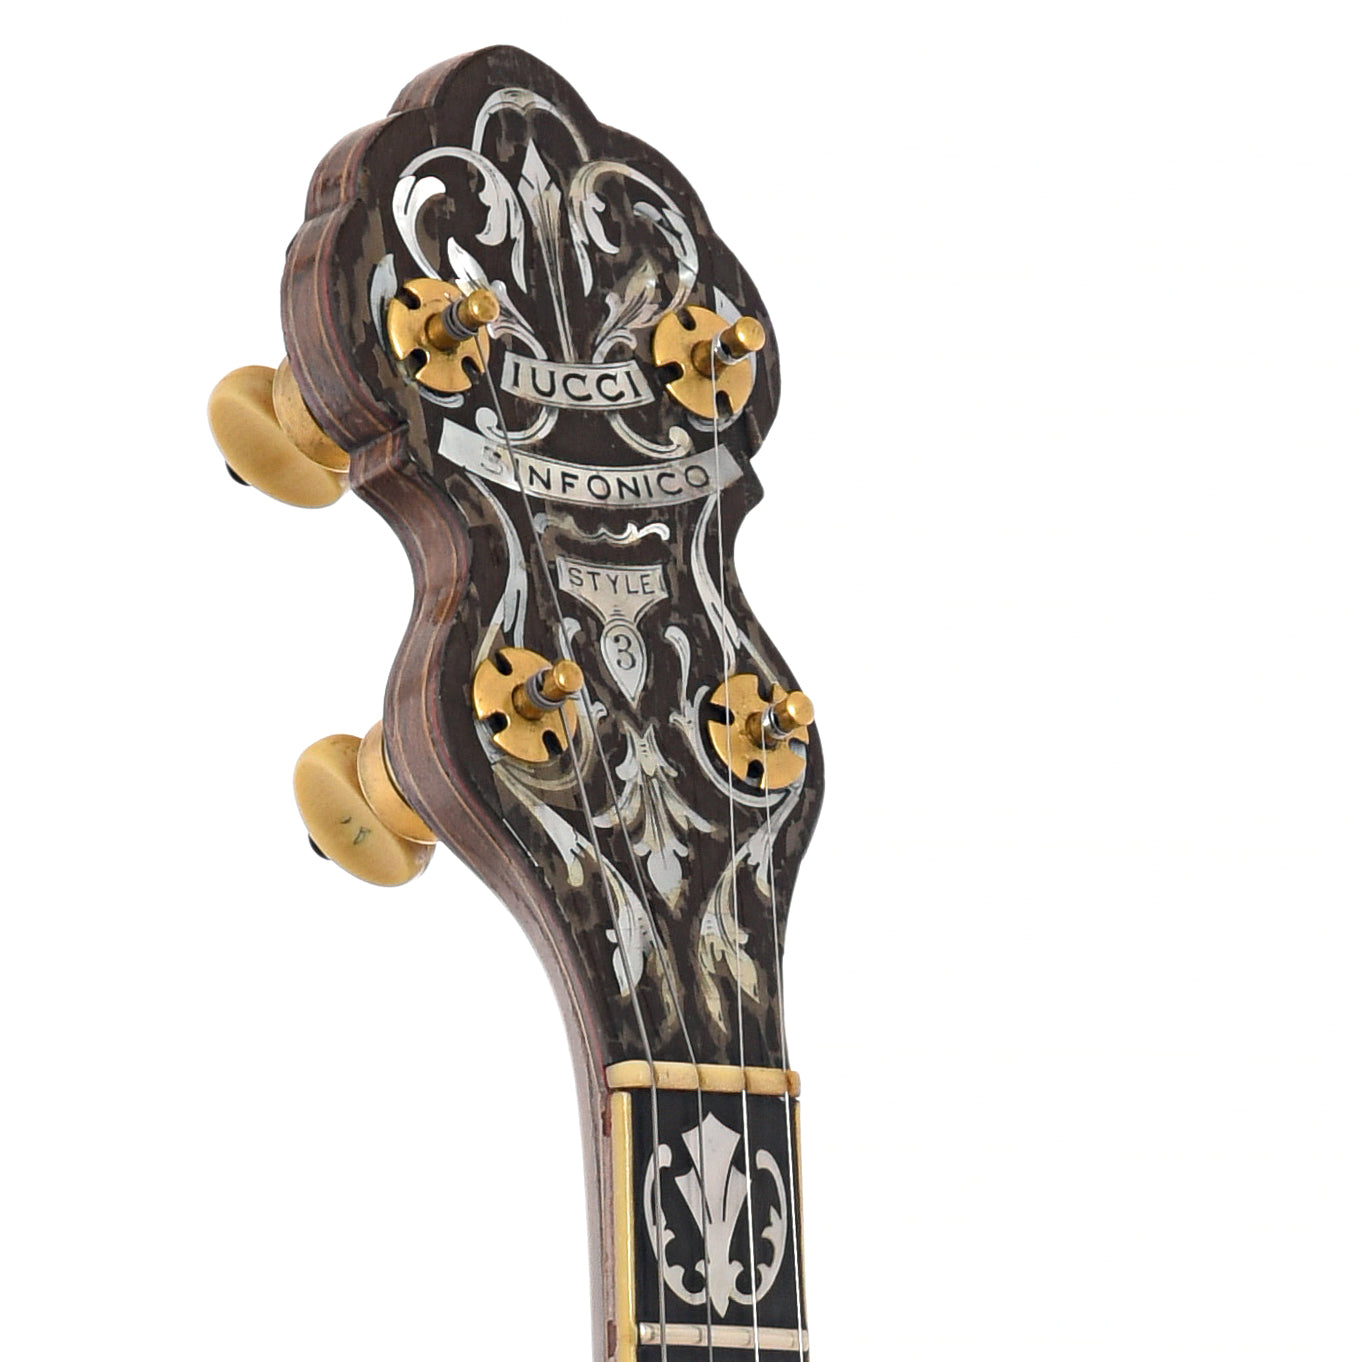 Headstock of Iucci Sinfonico Style 3 Tenor Banjo